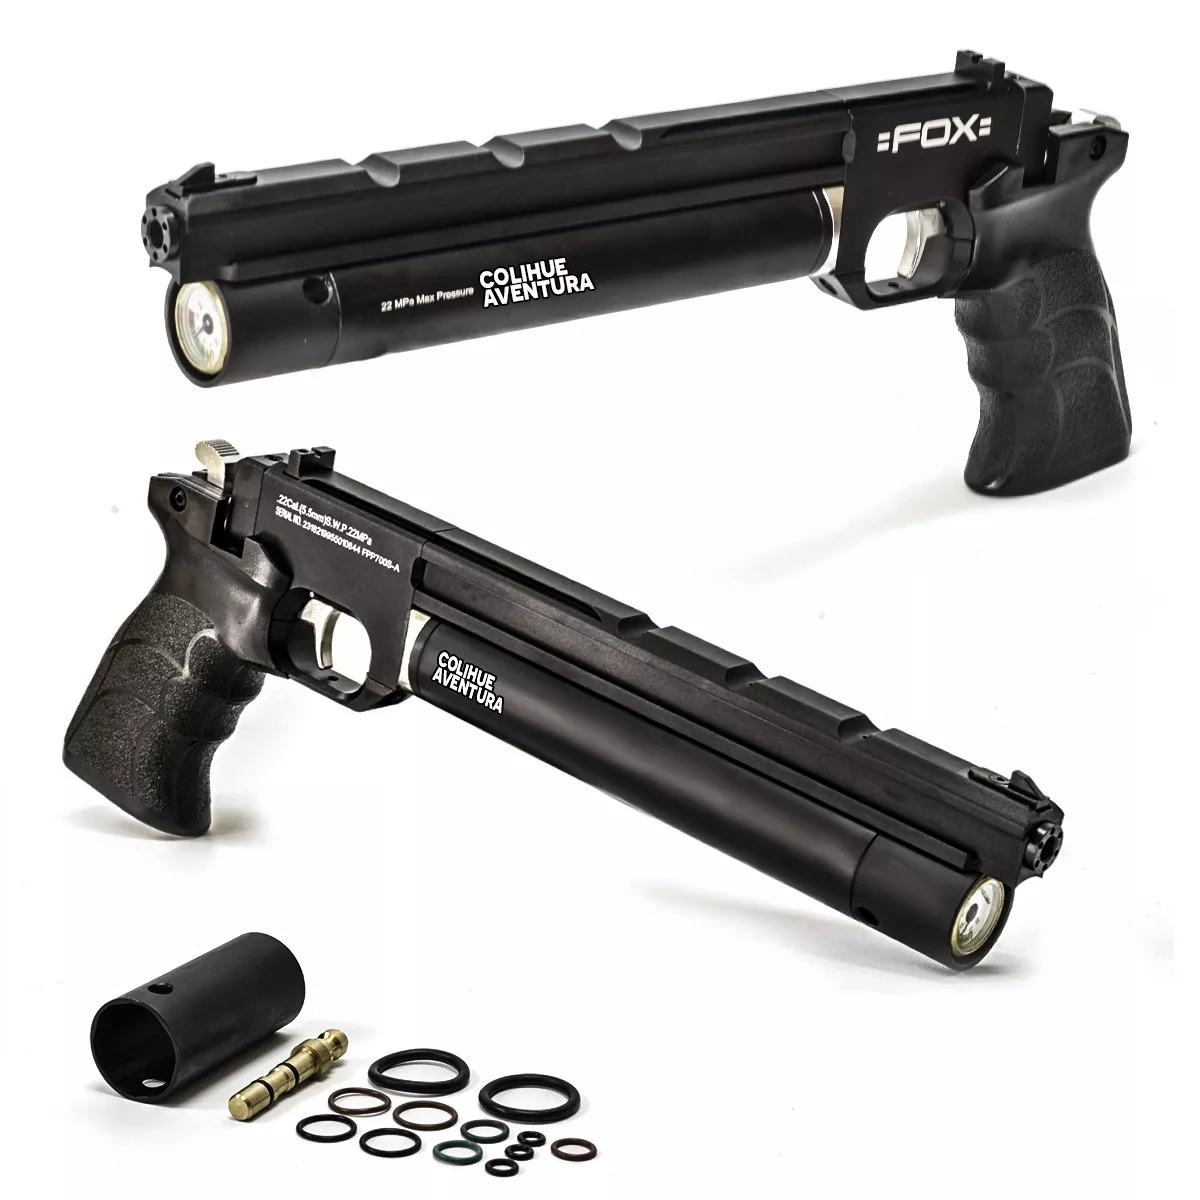 Pistola Co2 Fox G17 cal 4,5mm // Replica Glock 17 - Colihue Aventura